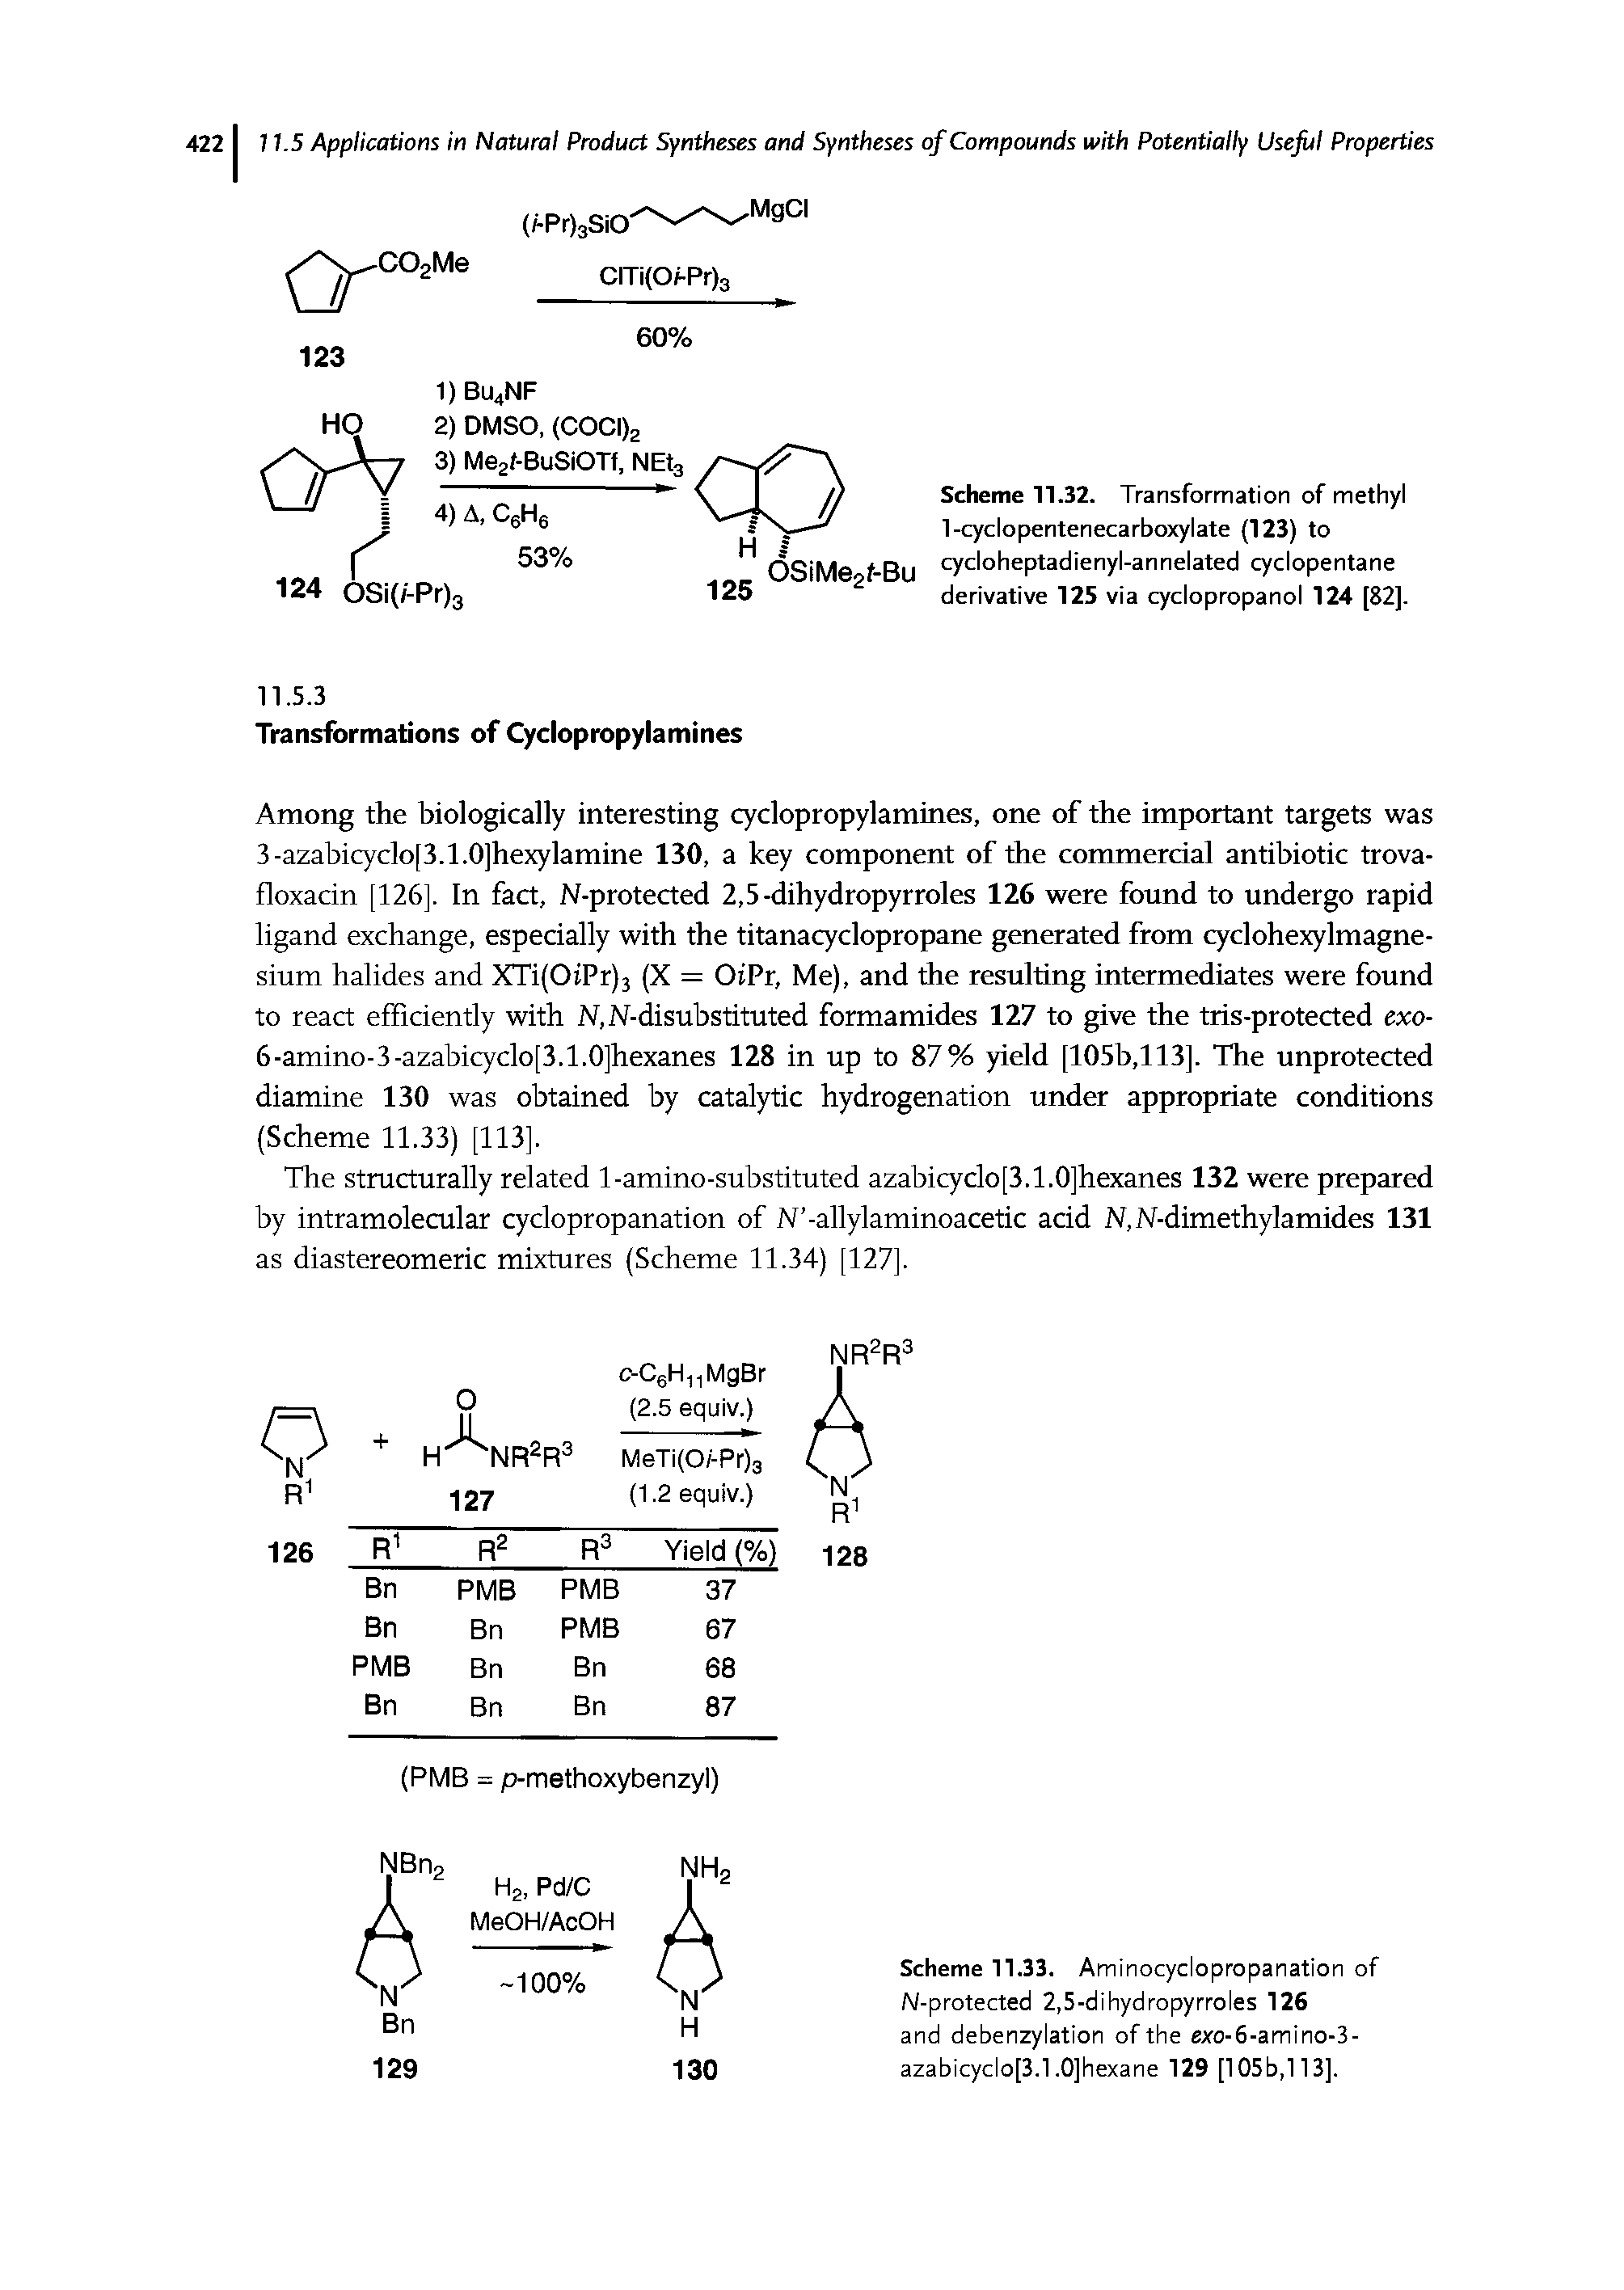 Scheme 11.33. Aminocyclopropanation of N-protected 2,5-dihydropyrroles 126 and debenzylation of the exo-6-amino-3-azabicyclo[3.1. OJhexane 129 [105b, 113].